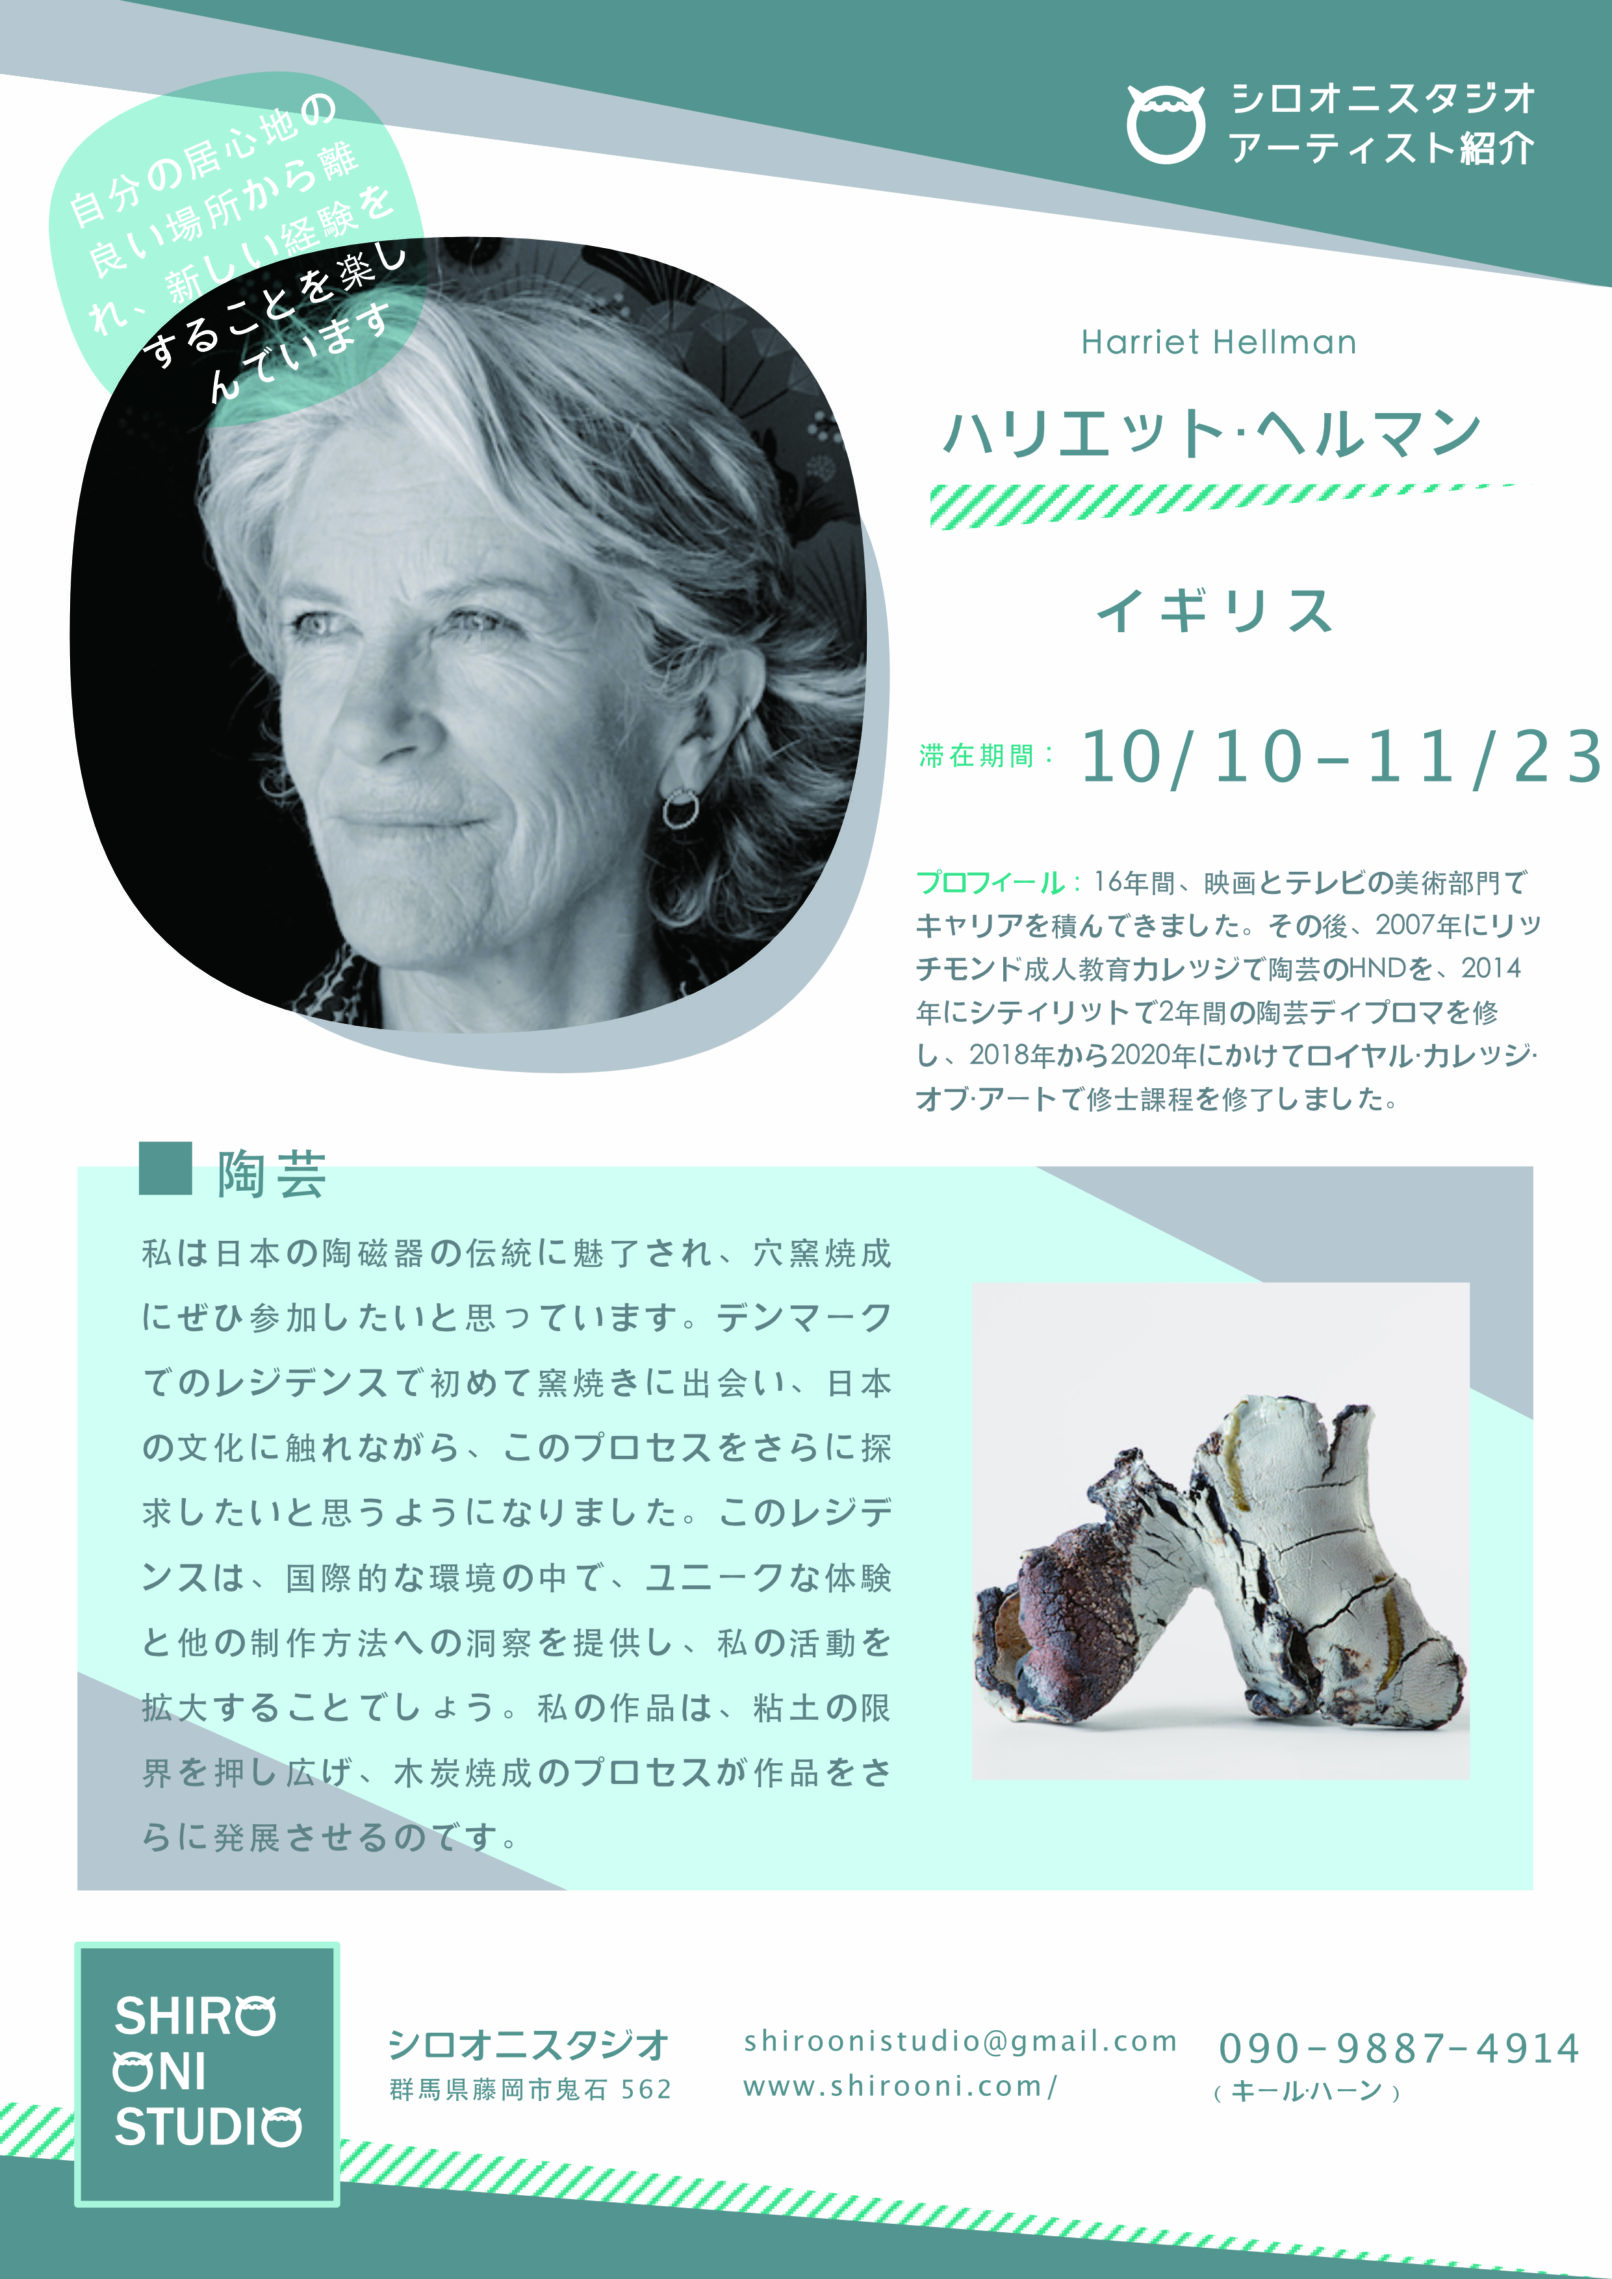 Ceramic Sculptor Harriet Hellman Artist Profile at Shiro Oni Studio